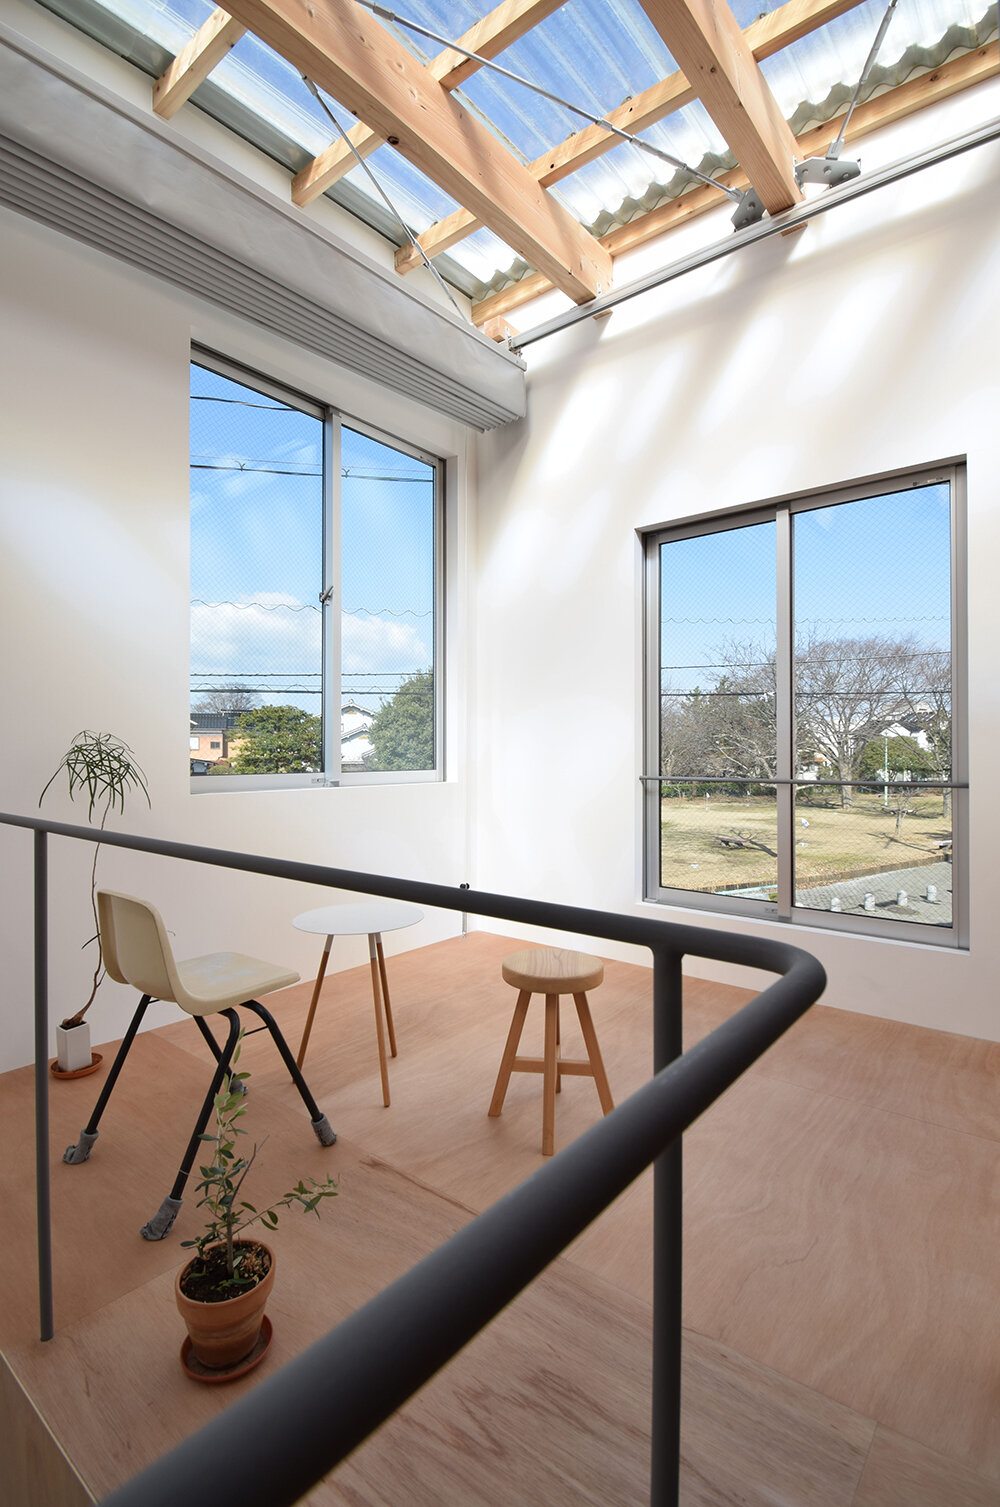 hiroshi kinoshita weaves all-season comfort into snug 'house with indoor garden' in japan